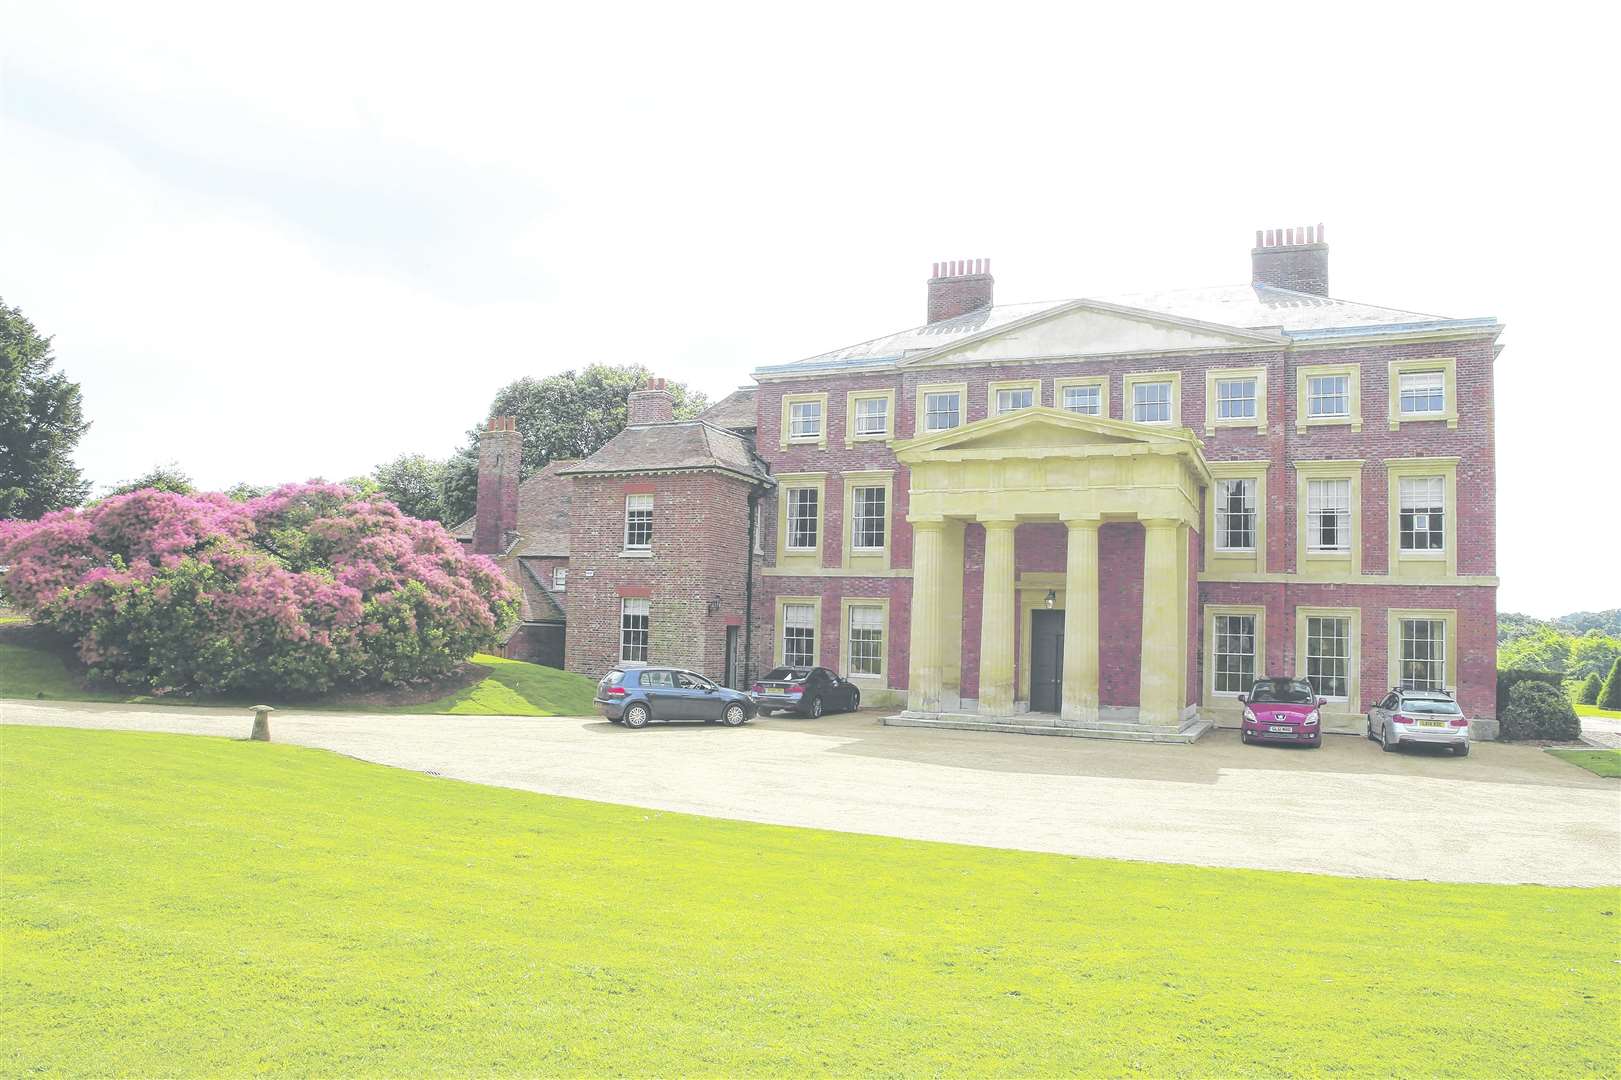 Goodnestone Park manor - did it help inspire Pride and Prejudice?